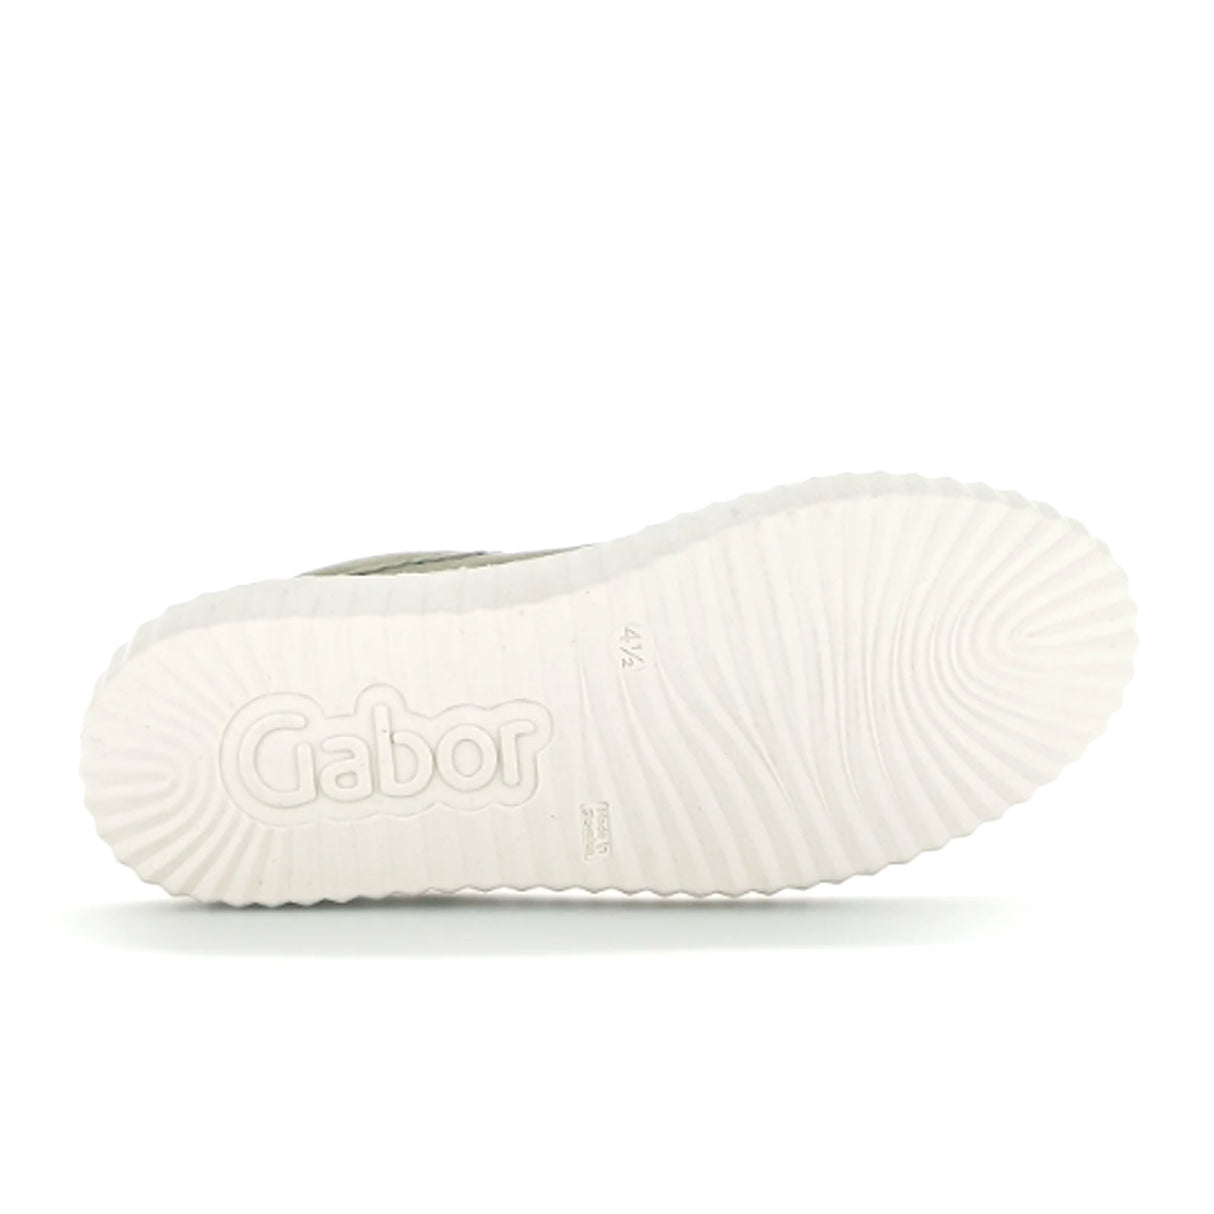 Gabor 23200-11 Double Zip Platform Sneaker (Women) - Schilf Samtchevreau Dress-Casual - Sneakers - The Heel Shoe Fitters